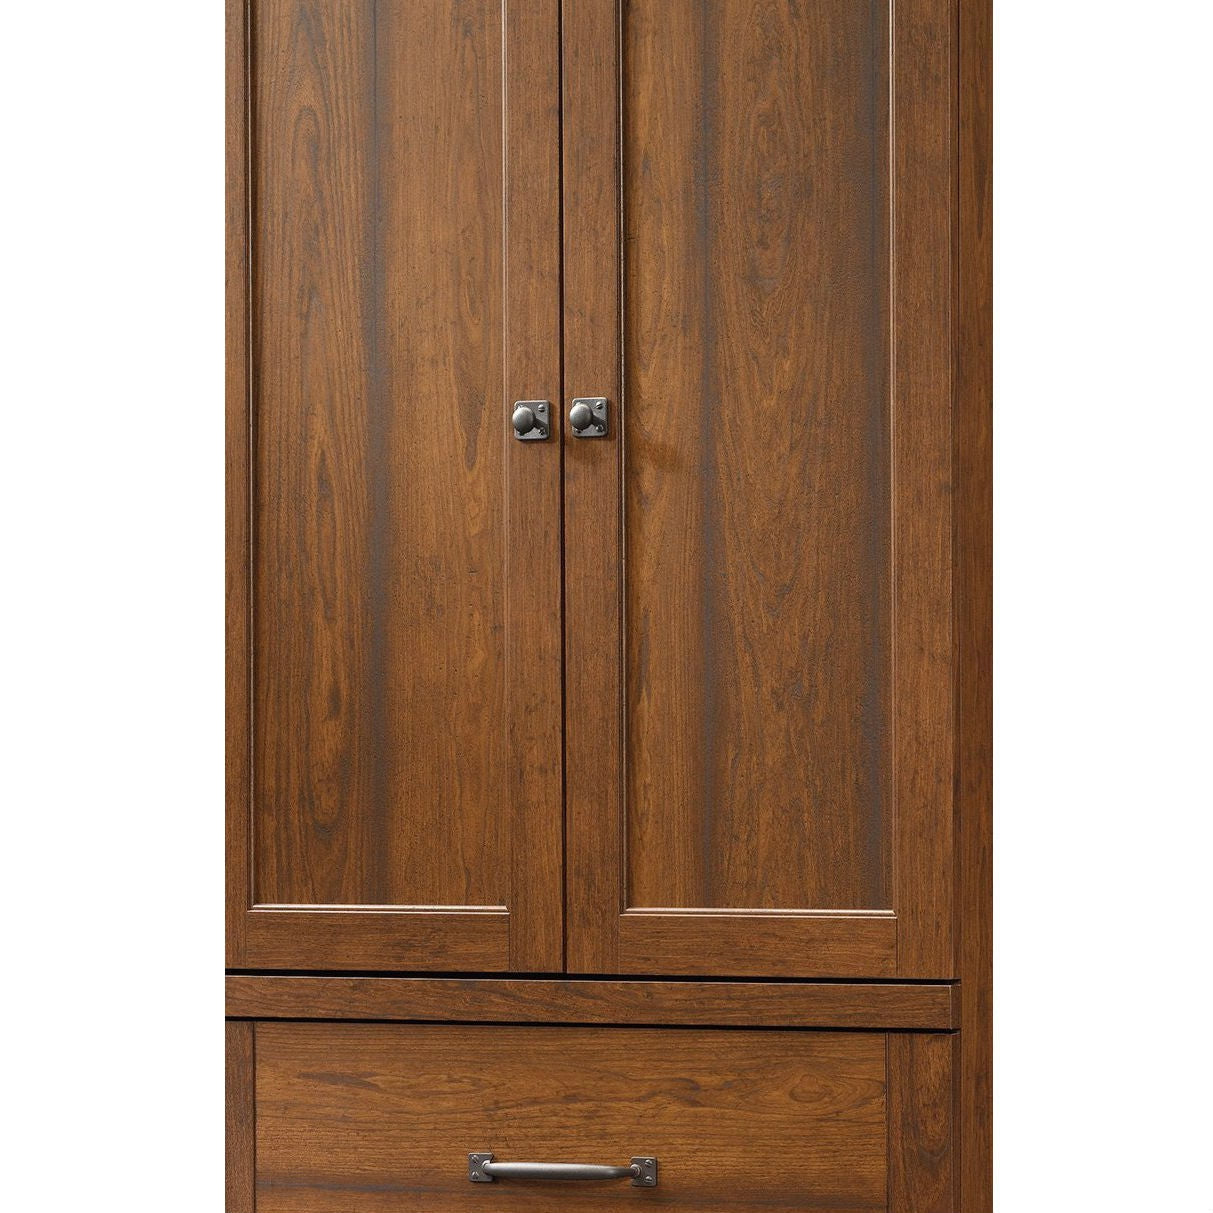 Bedroom > Wardrobe & Armoire - Bedroom Wardrobe Cabinet Storage Armoire In Medium Brown Cherry Wood Finish